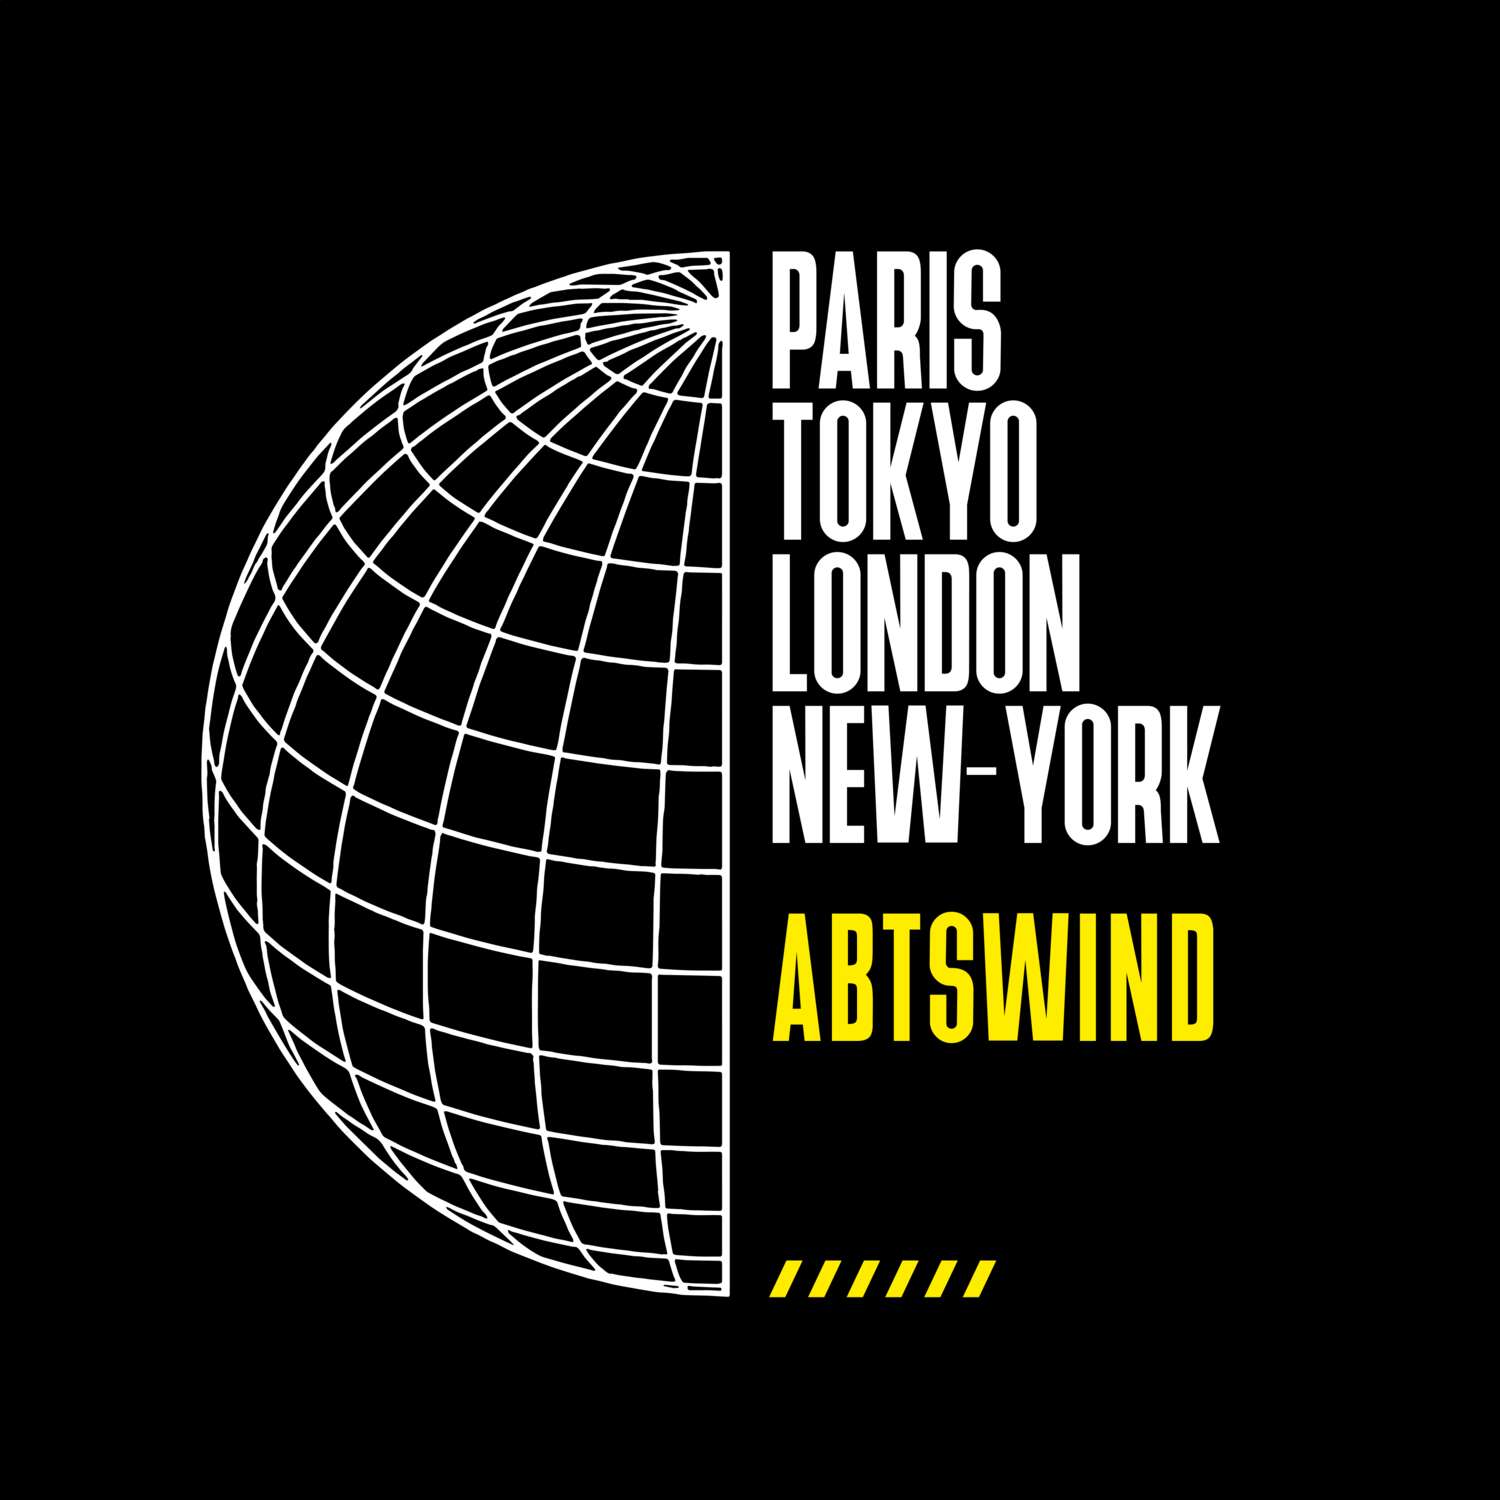 Abtswind T-Shirt »Paris Tokyo London«